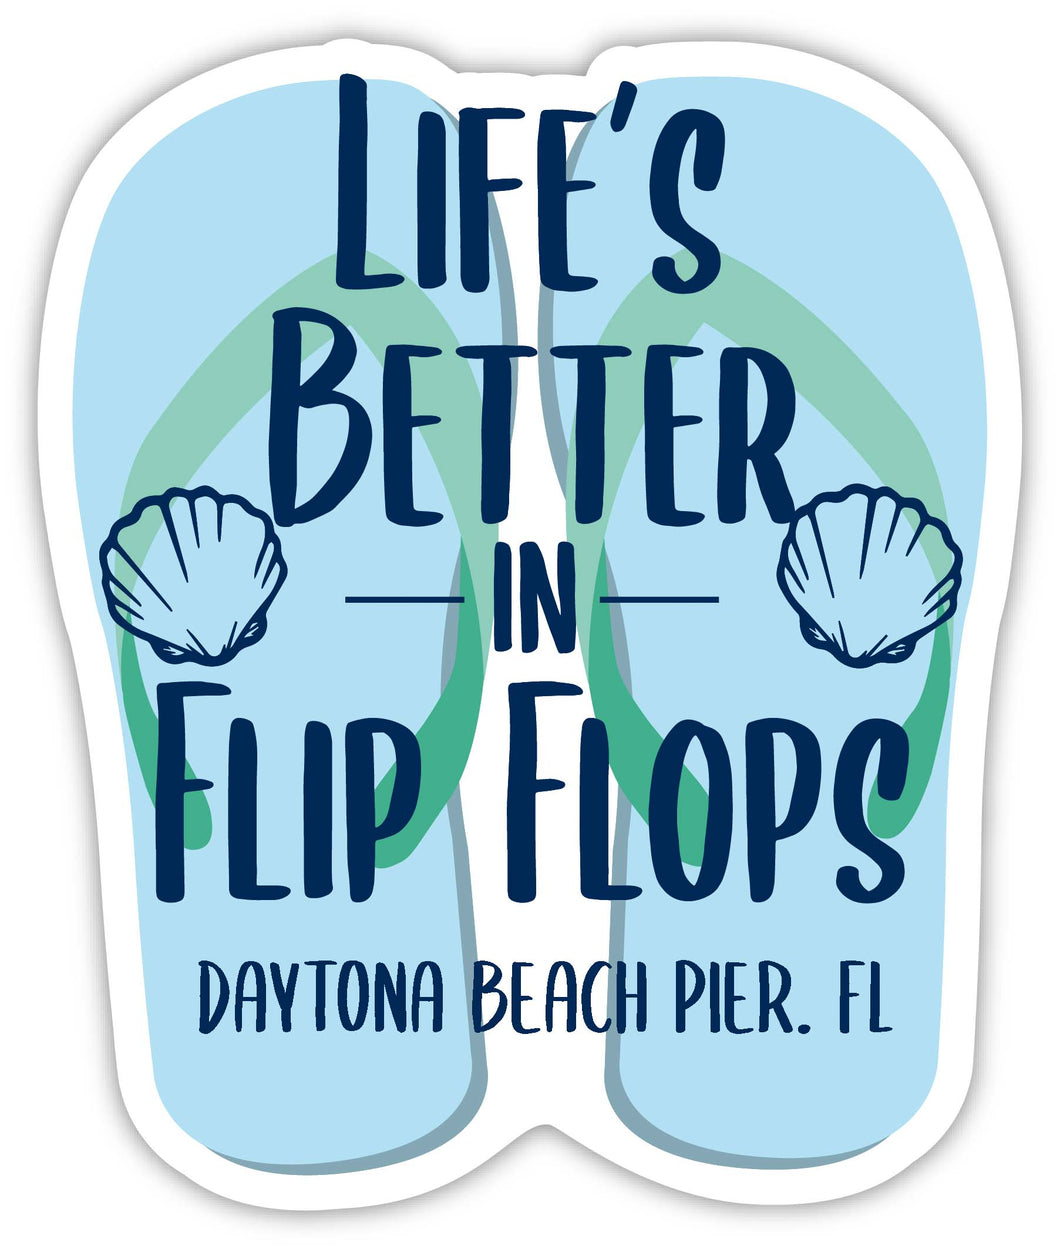 Daytona Beach Pier Florida Souvenir 4 Inch Vinyl Decal Sticker Flip Flop Design